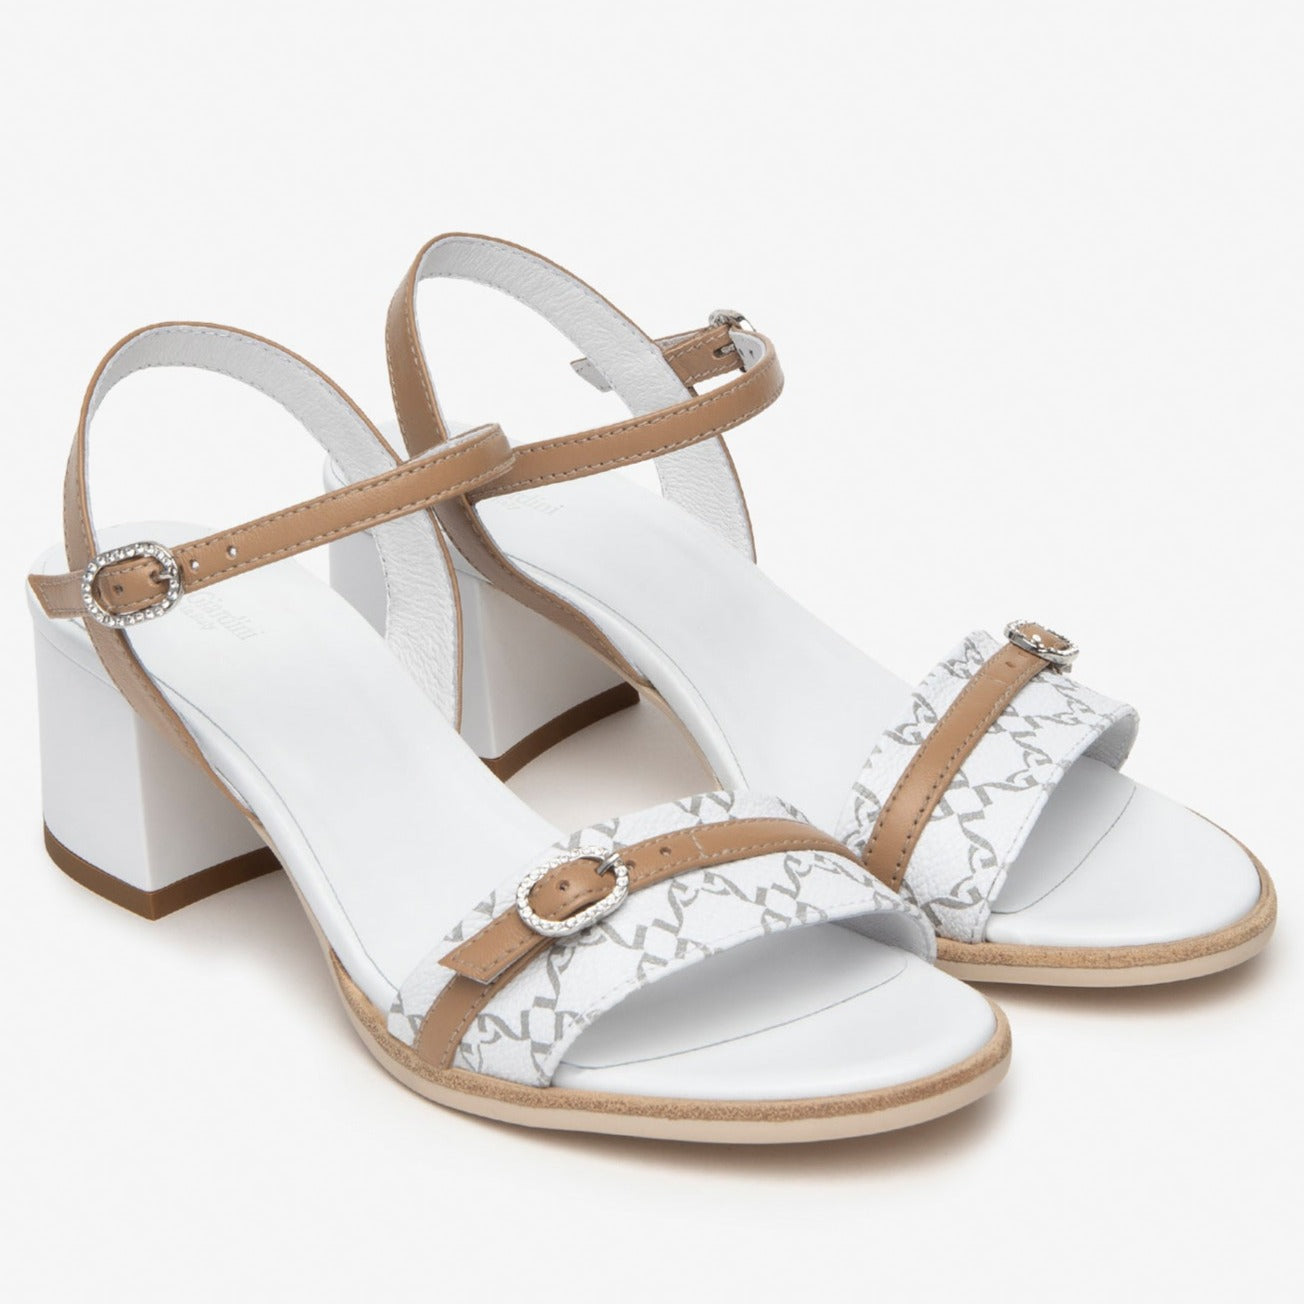 Sandals NeroGiardini women white leather nappa inserts heel